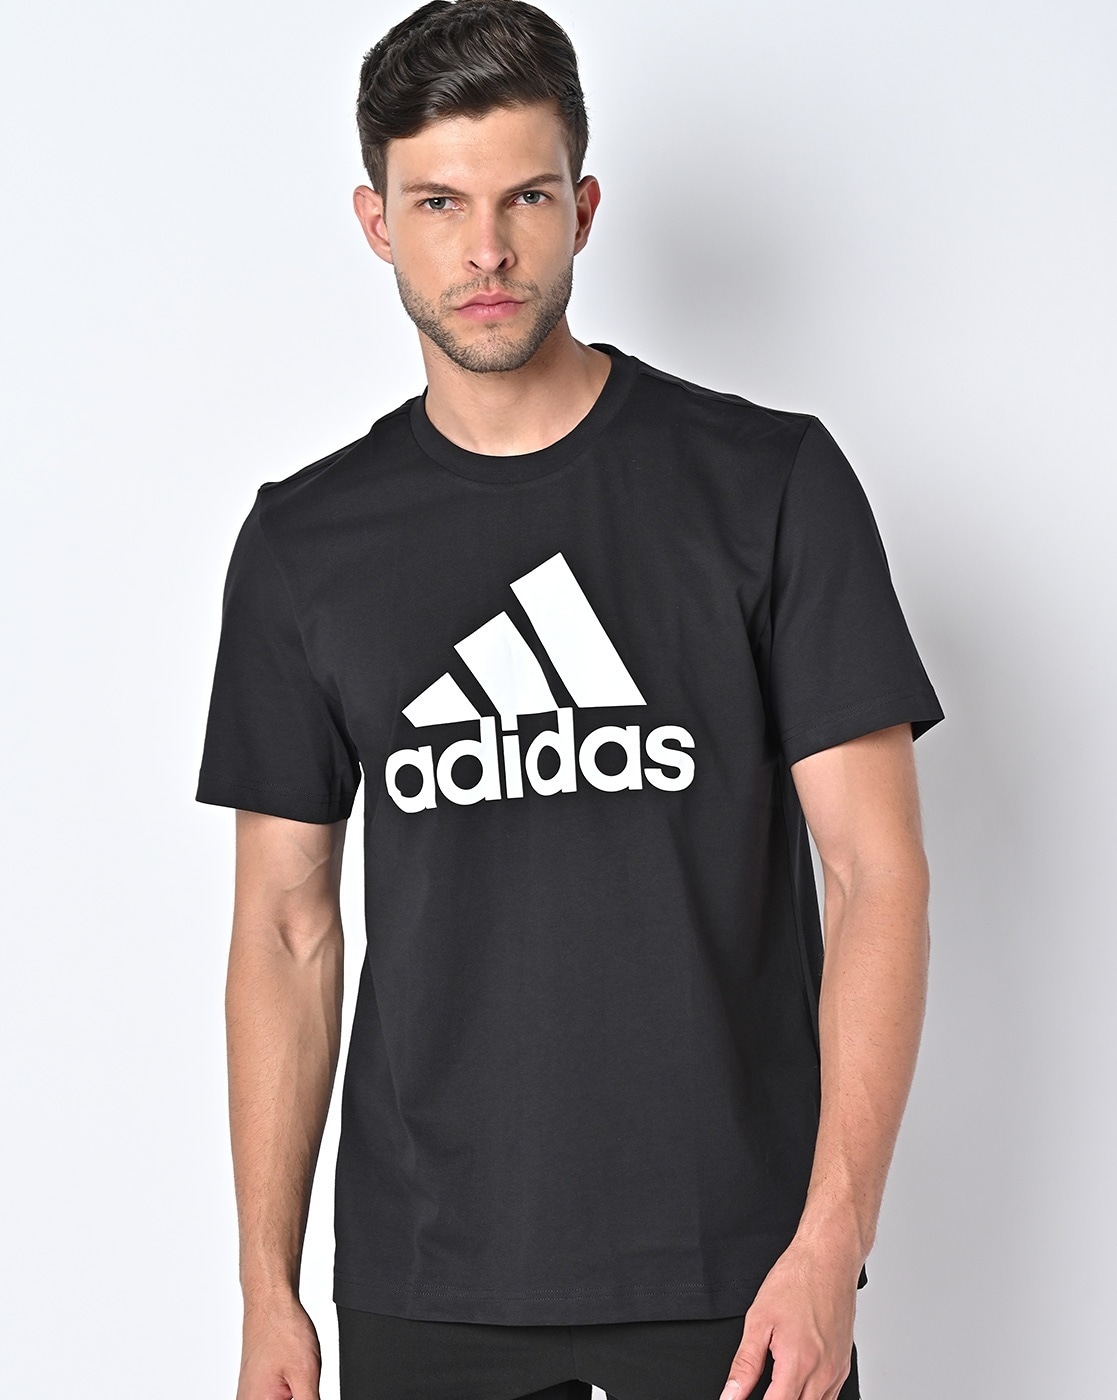 Men by for Black Online Buy ADIDAS Tshirts